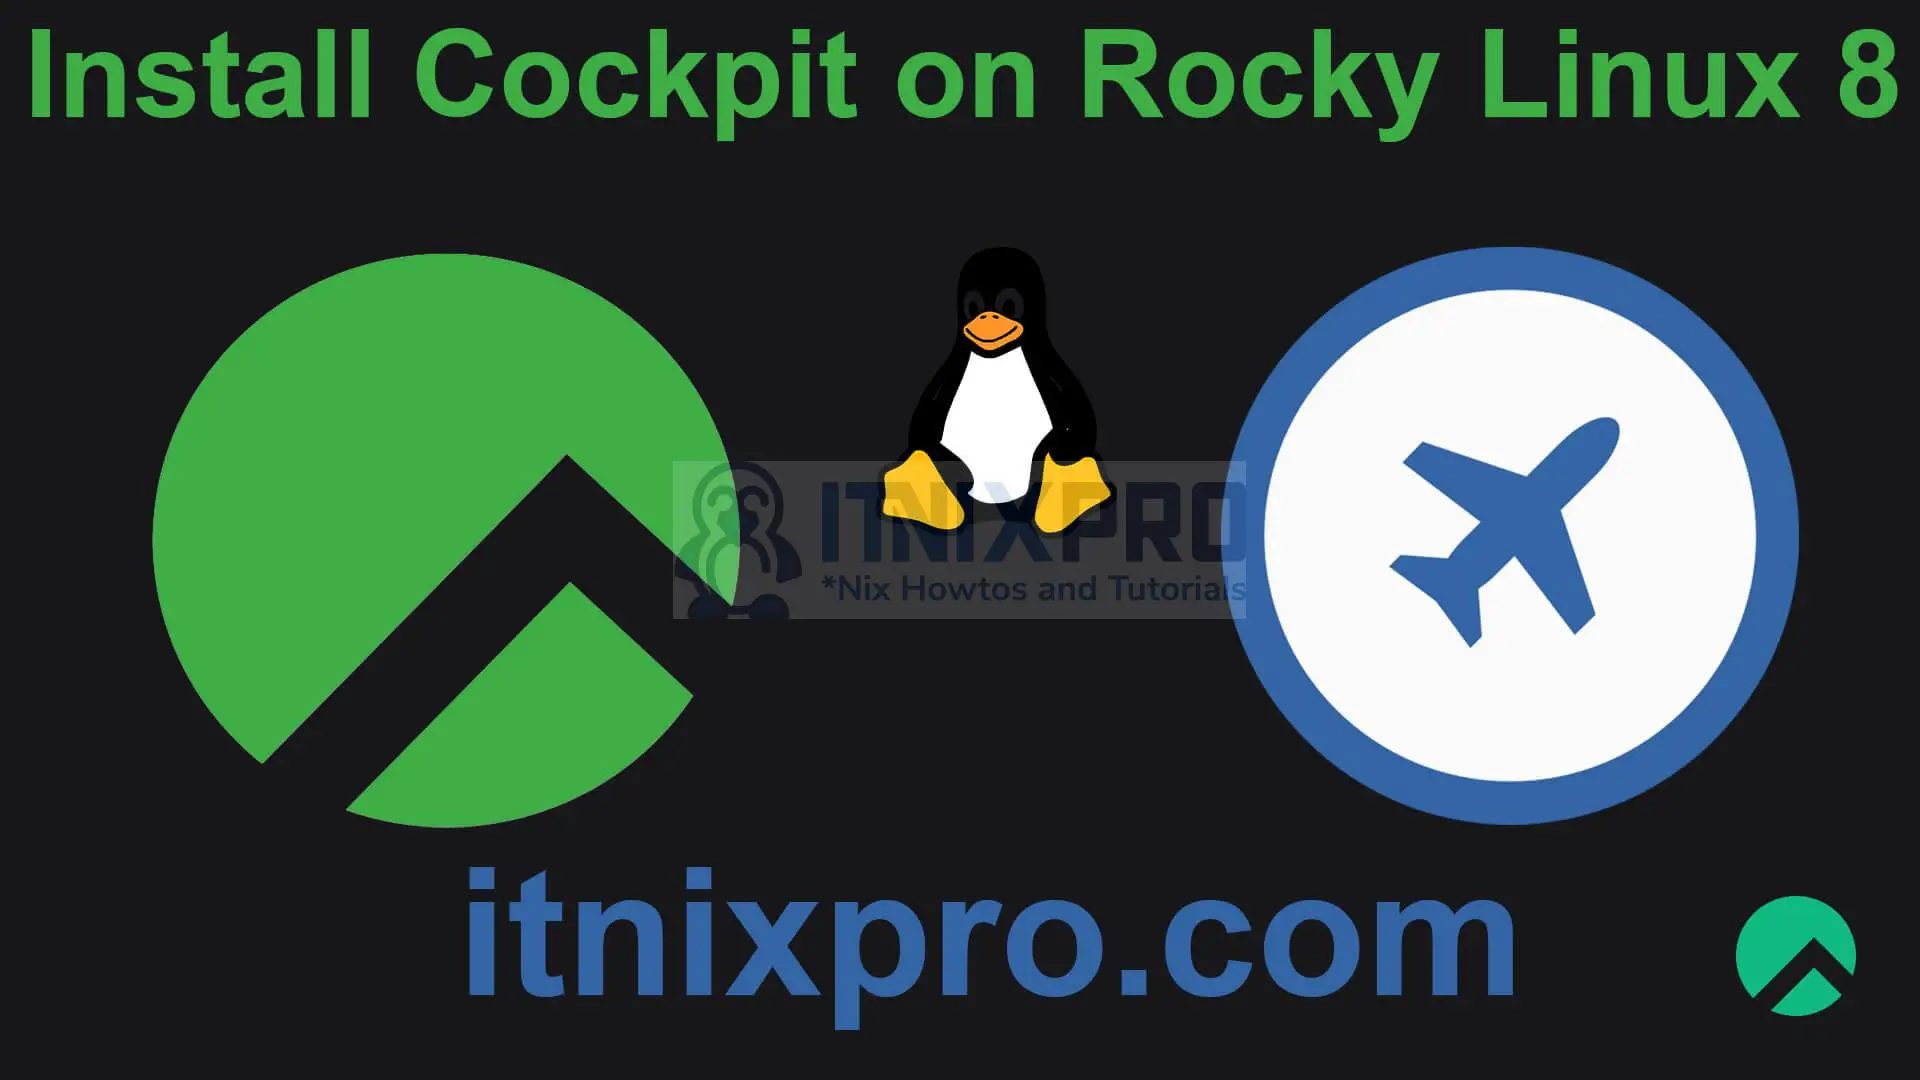 Install cockpit on Rocky Linux 8